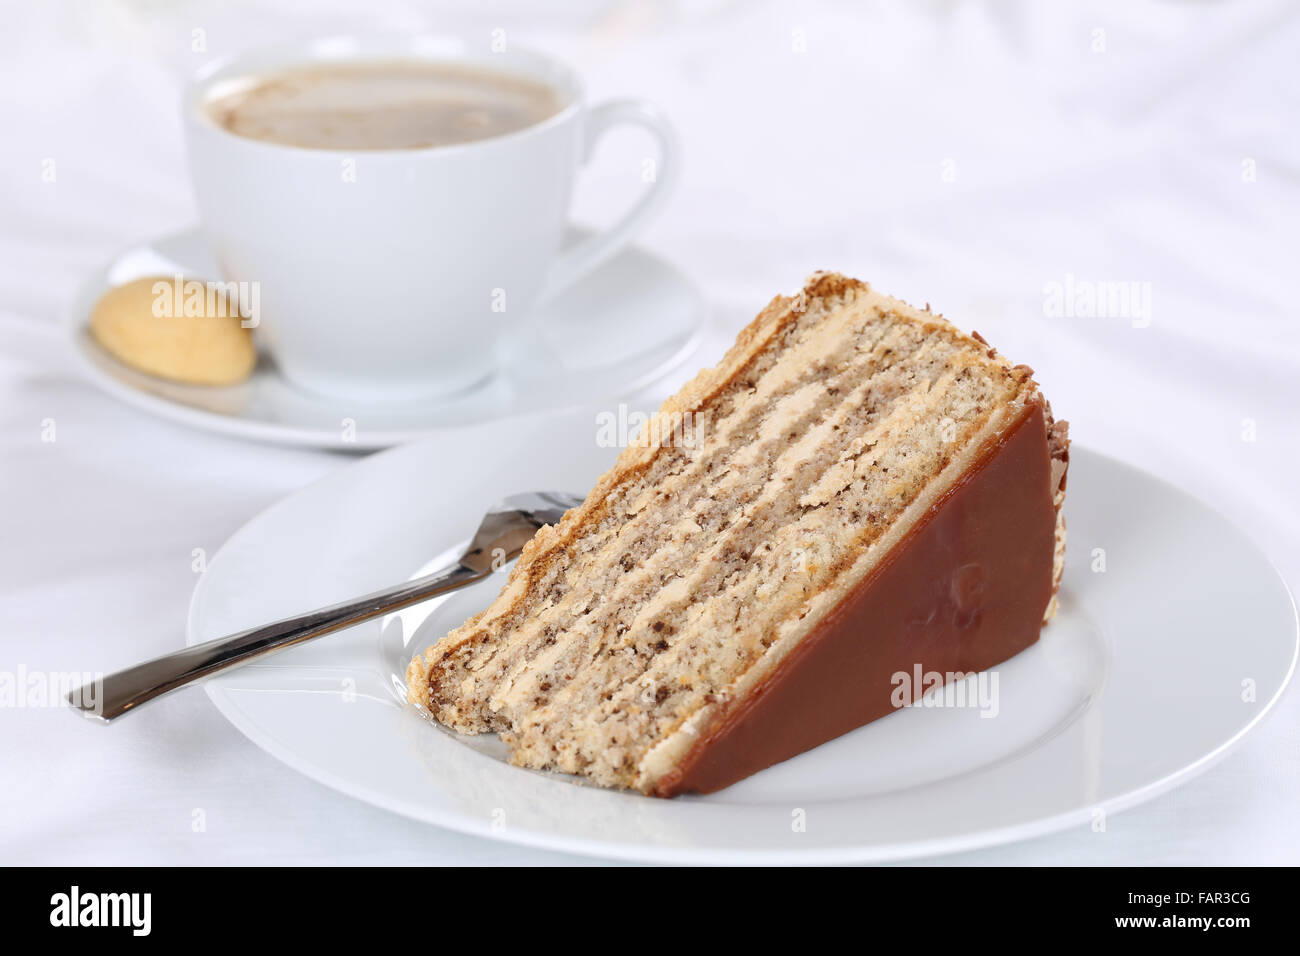 Coffee and nut cake tart dessert sweet pastry Stock Photo